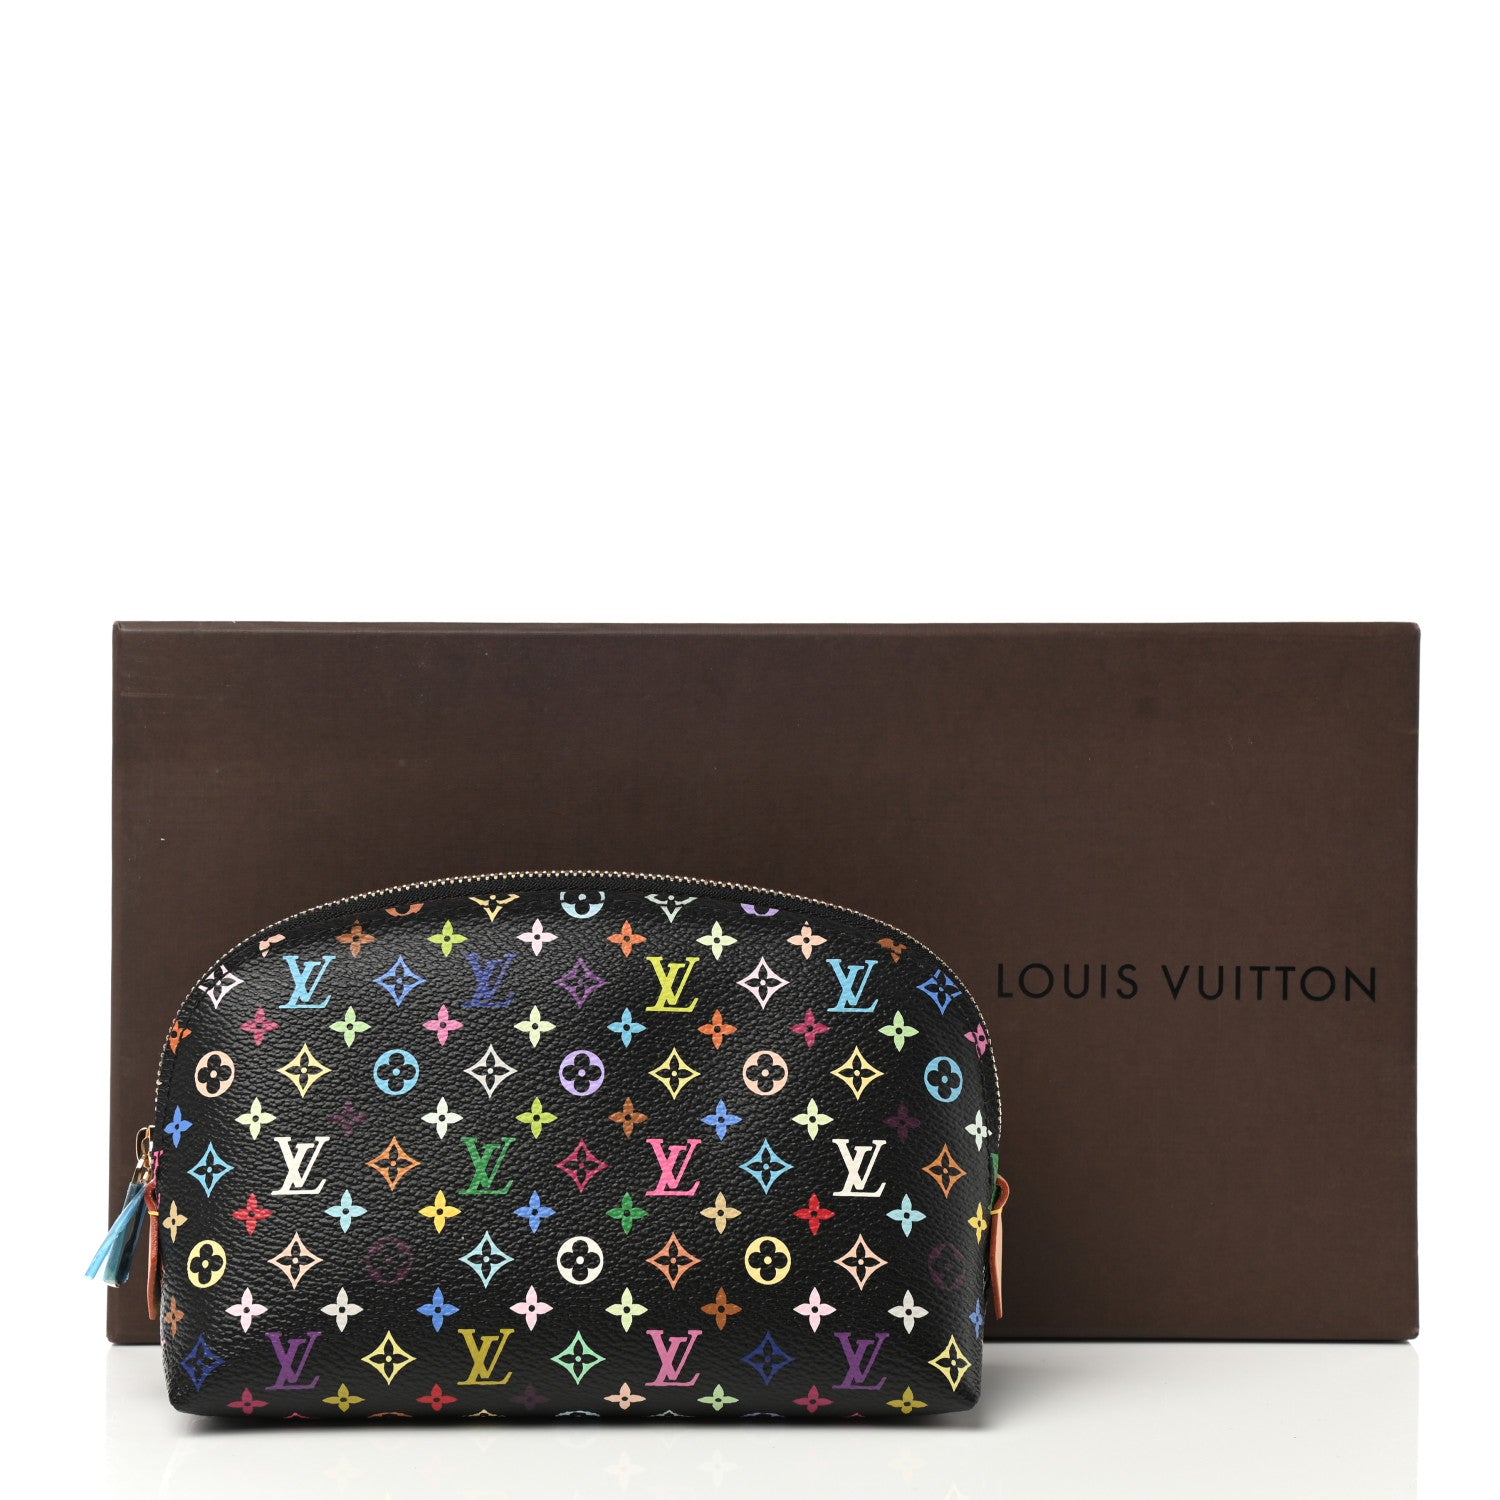 Louis Vuitton Cosmetic Pouch in Multicolore Noir - SOLD